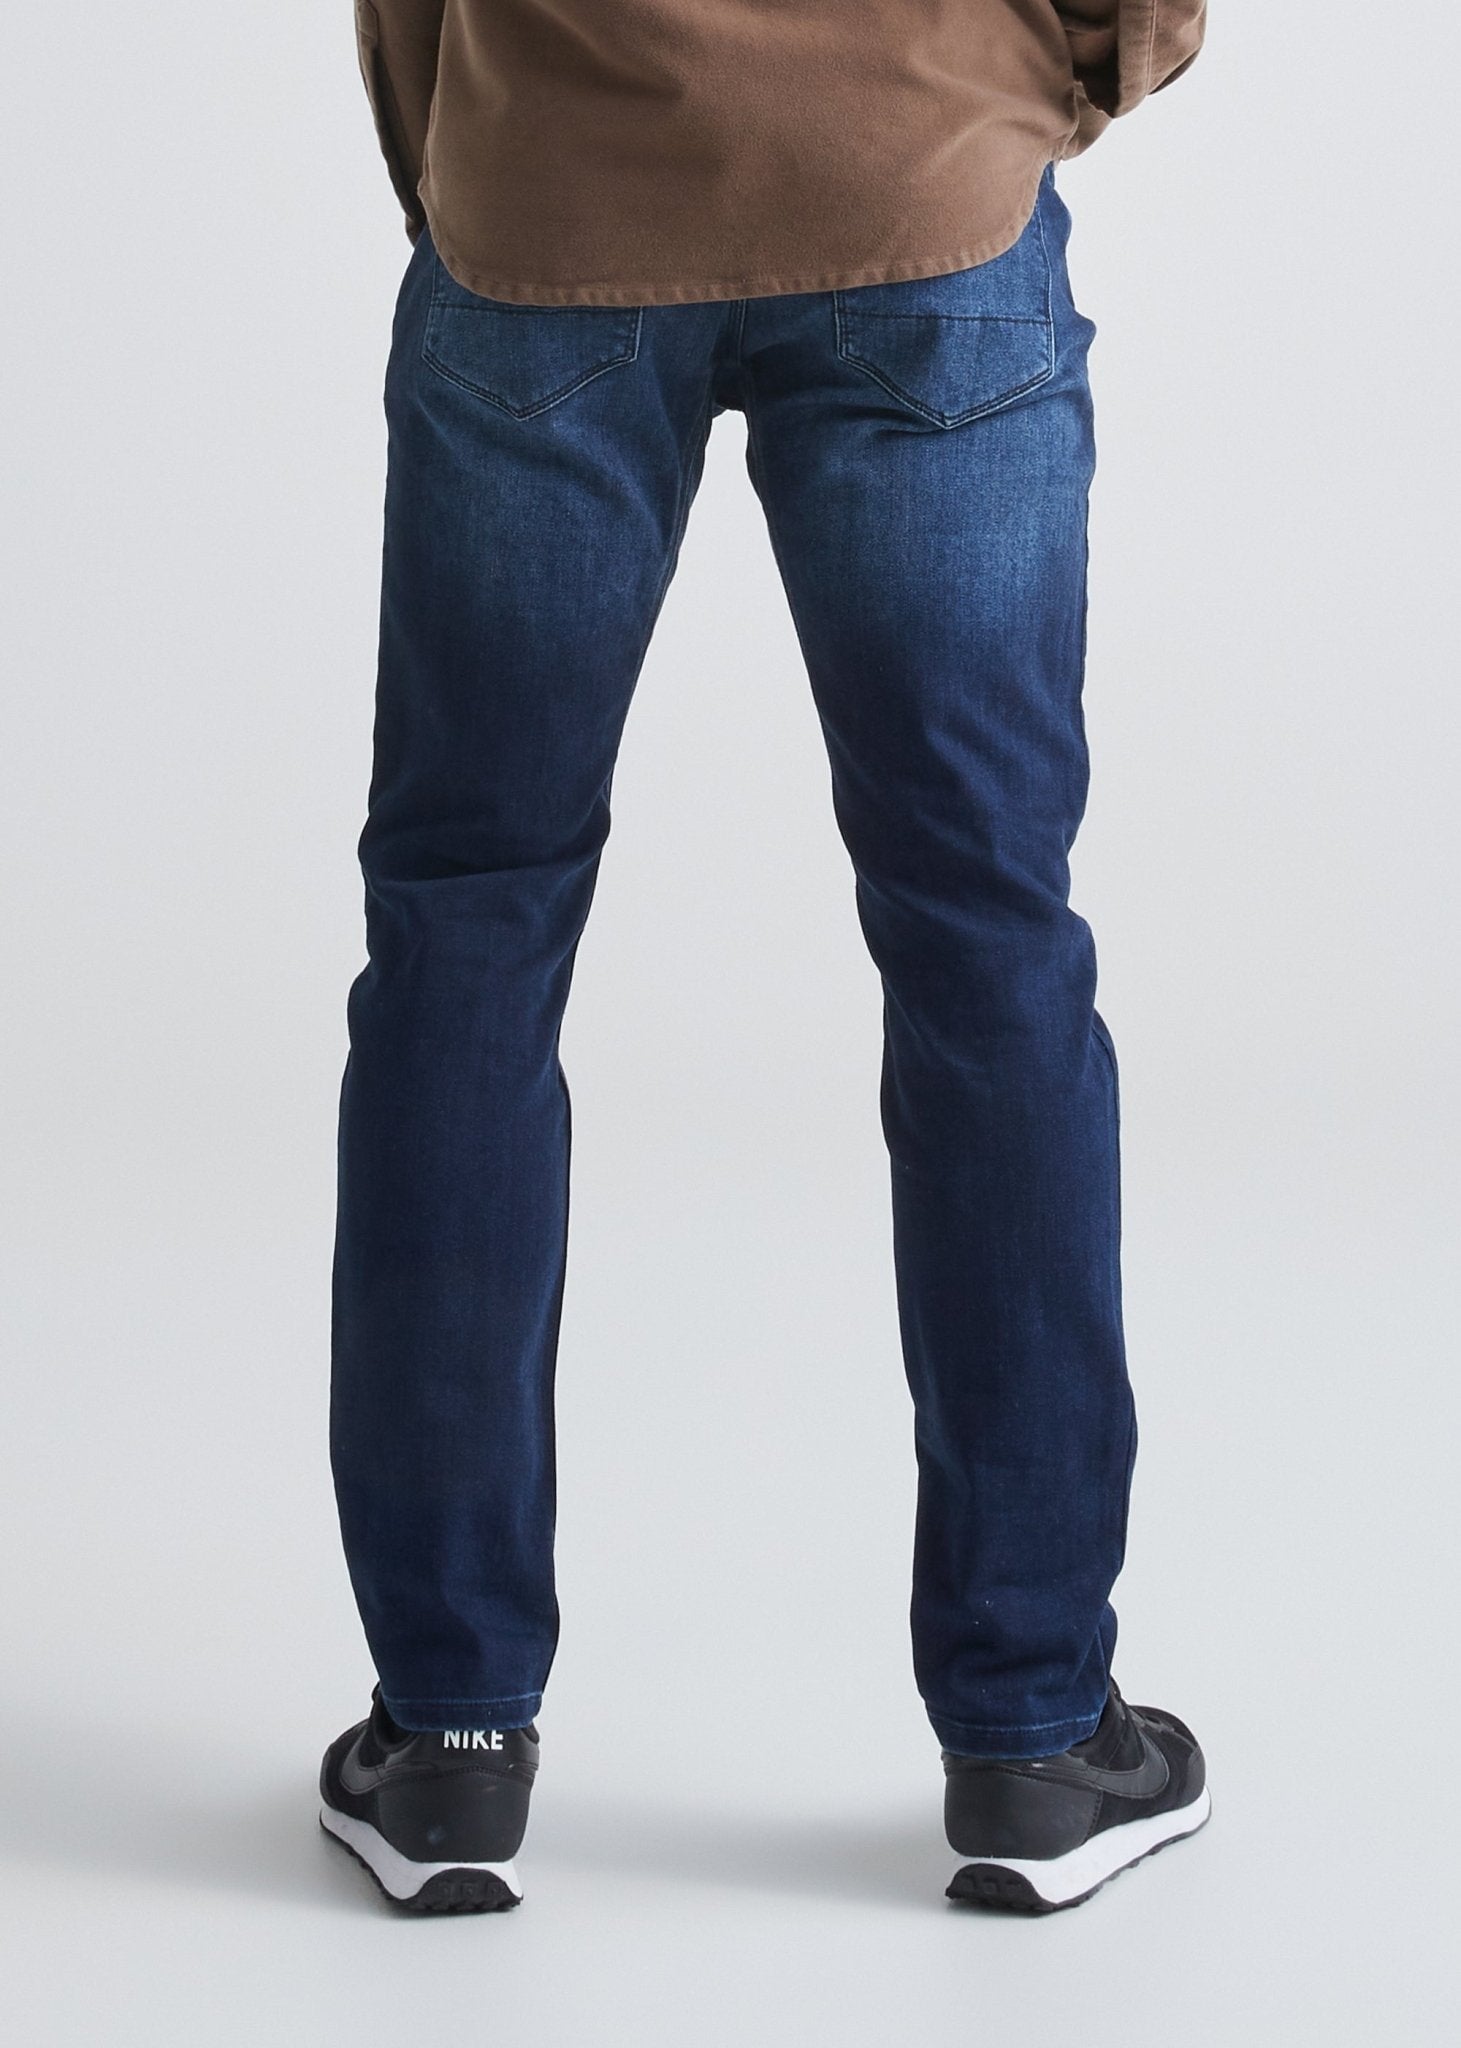 mens blue slim fit water resistant stretch jeans back